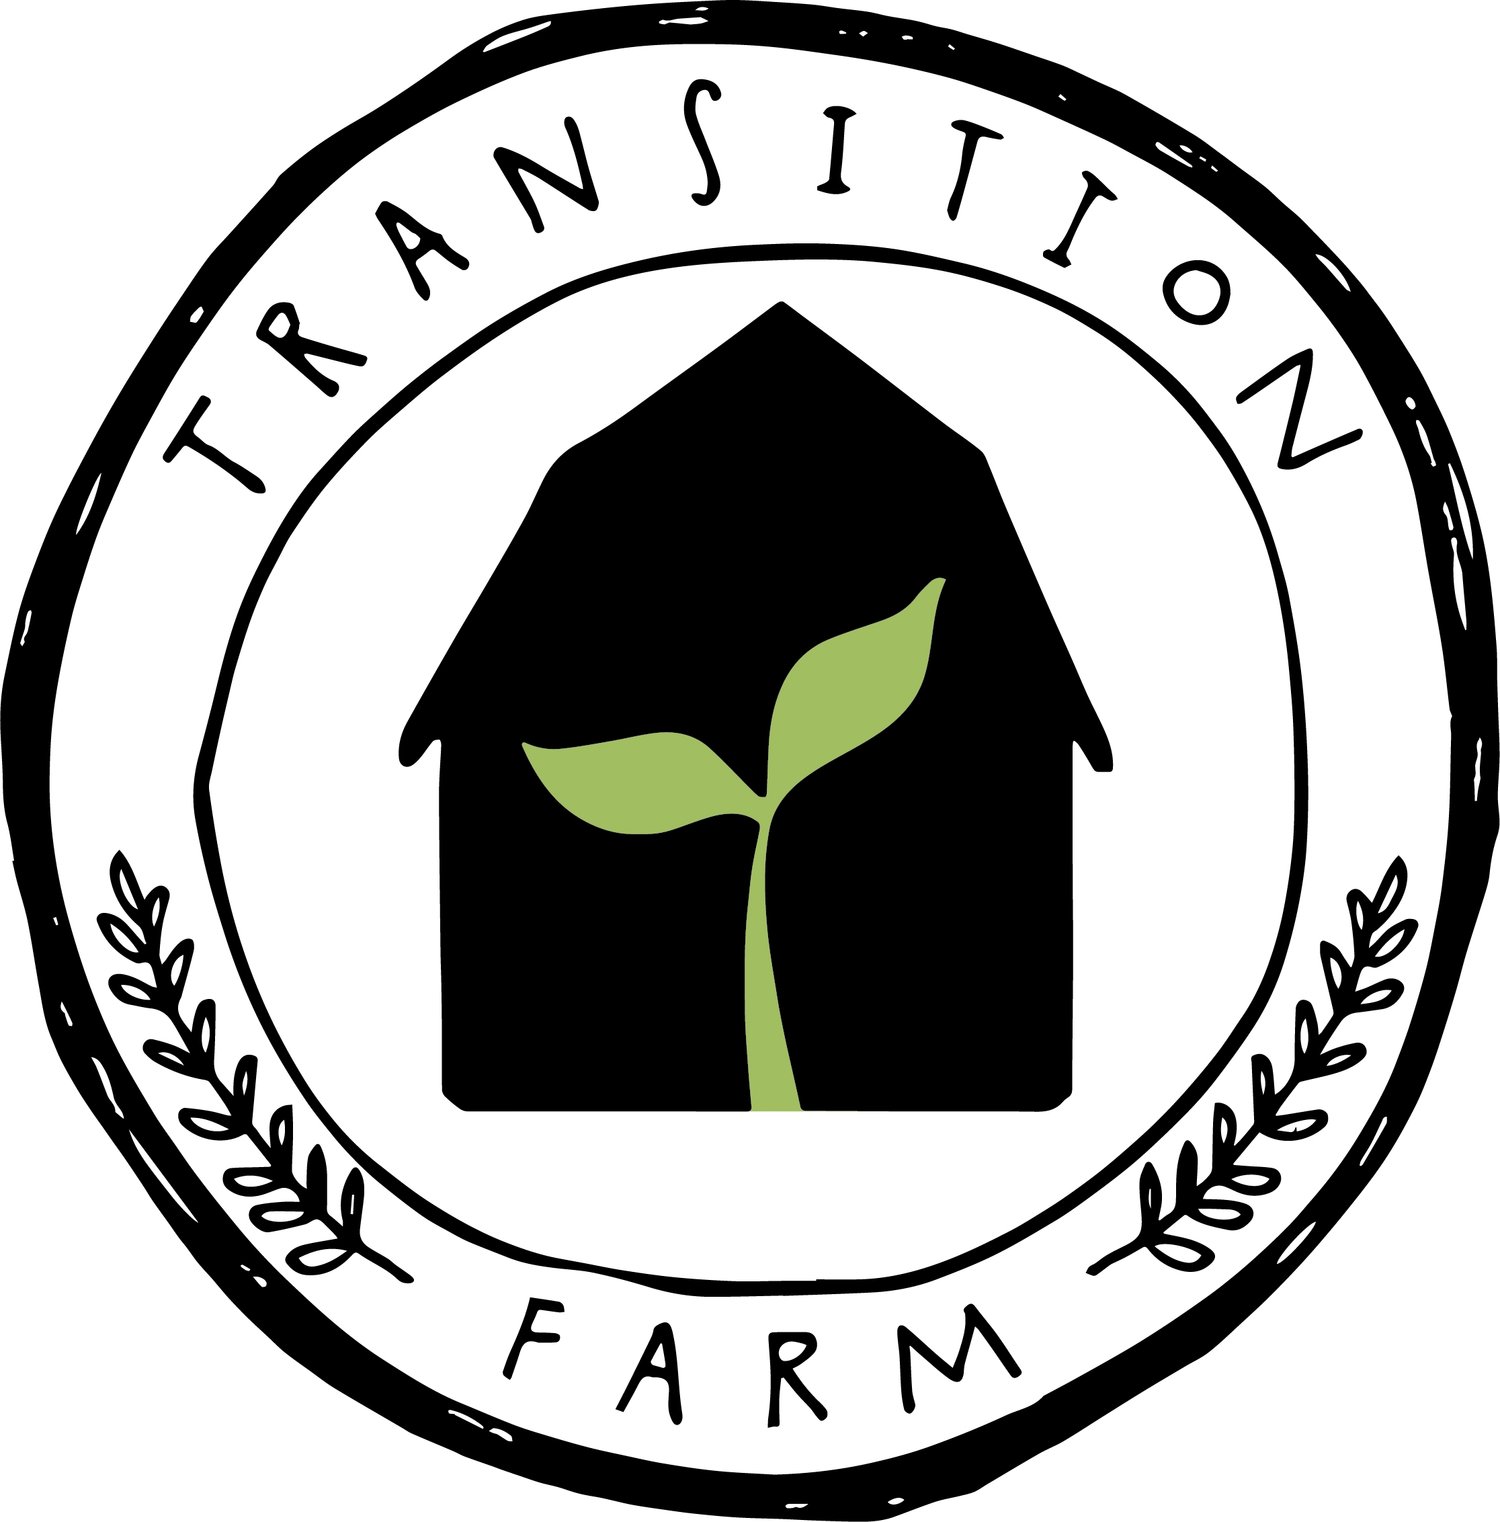 Transition Farm